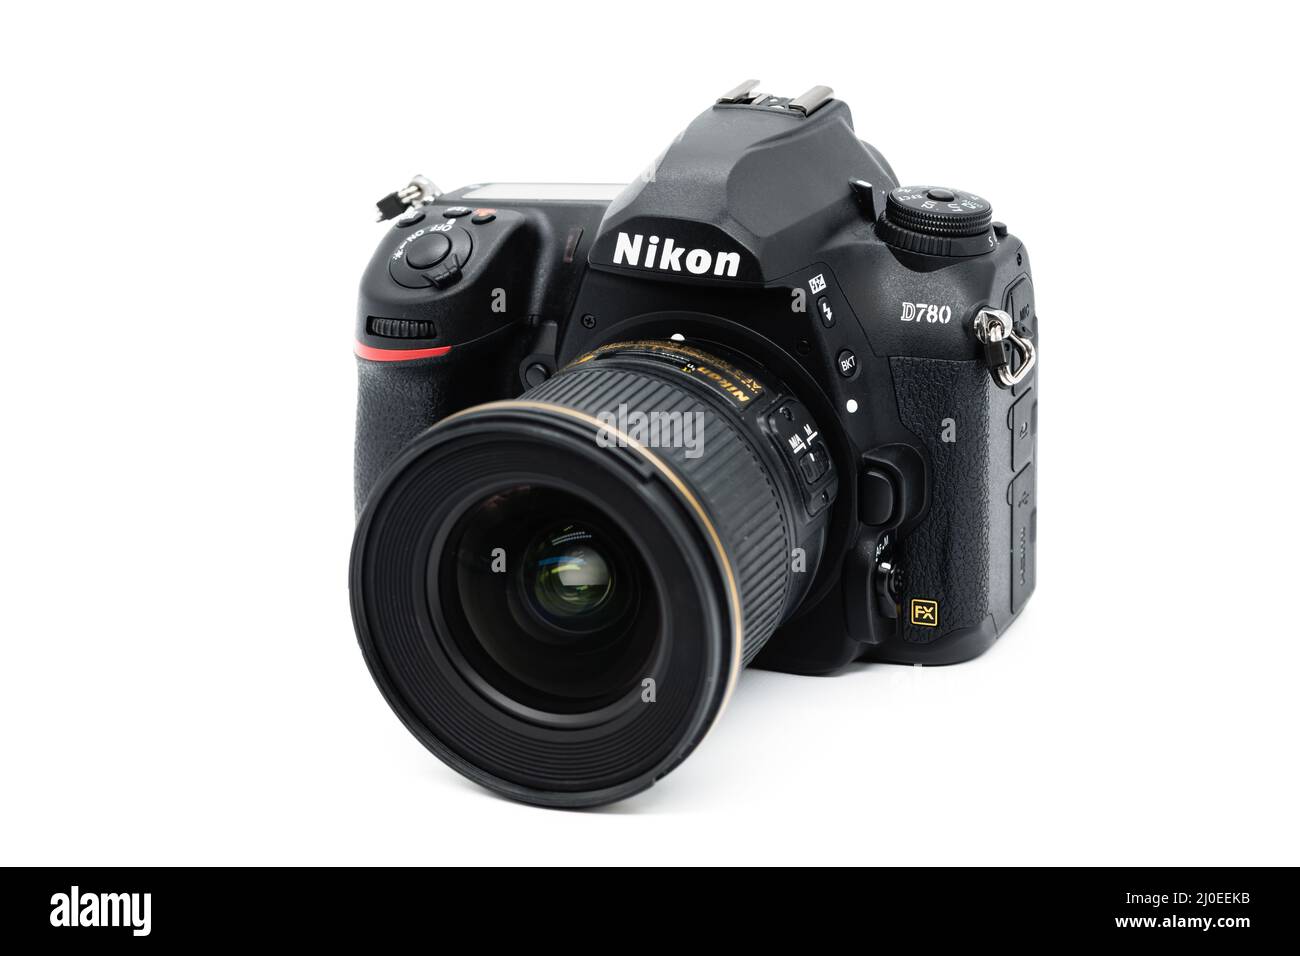 Puerto Vallarta, Jalisco Mexiko - März 17 2022: Die neueste digitale Spiegelreflexkamera Nikon Corporation, die Nikon D780. Stockfoto